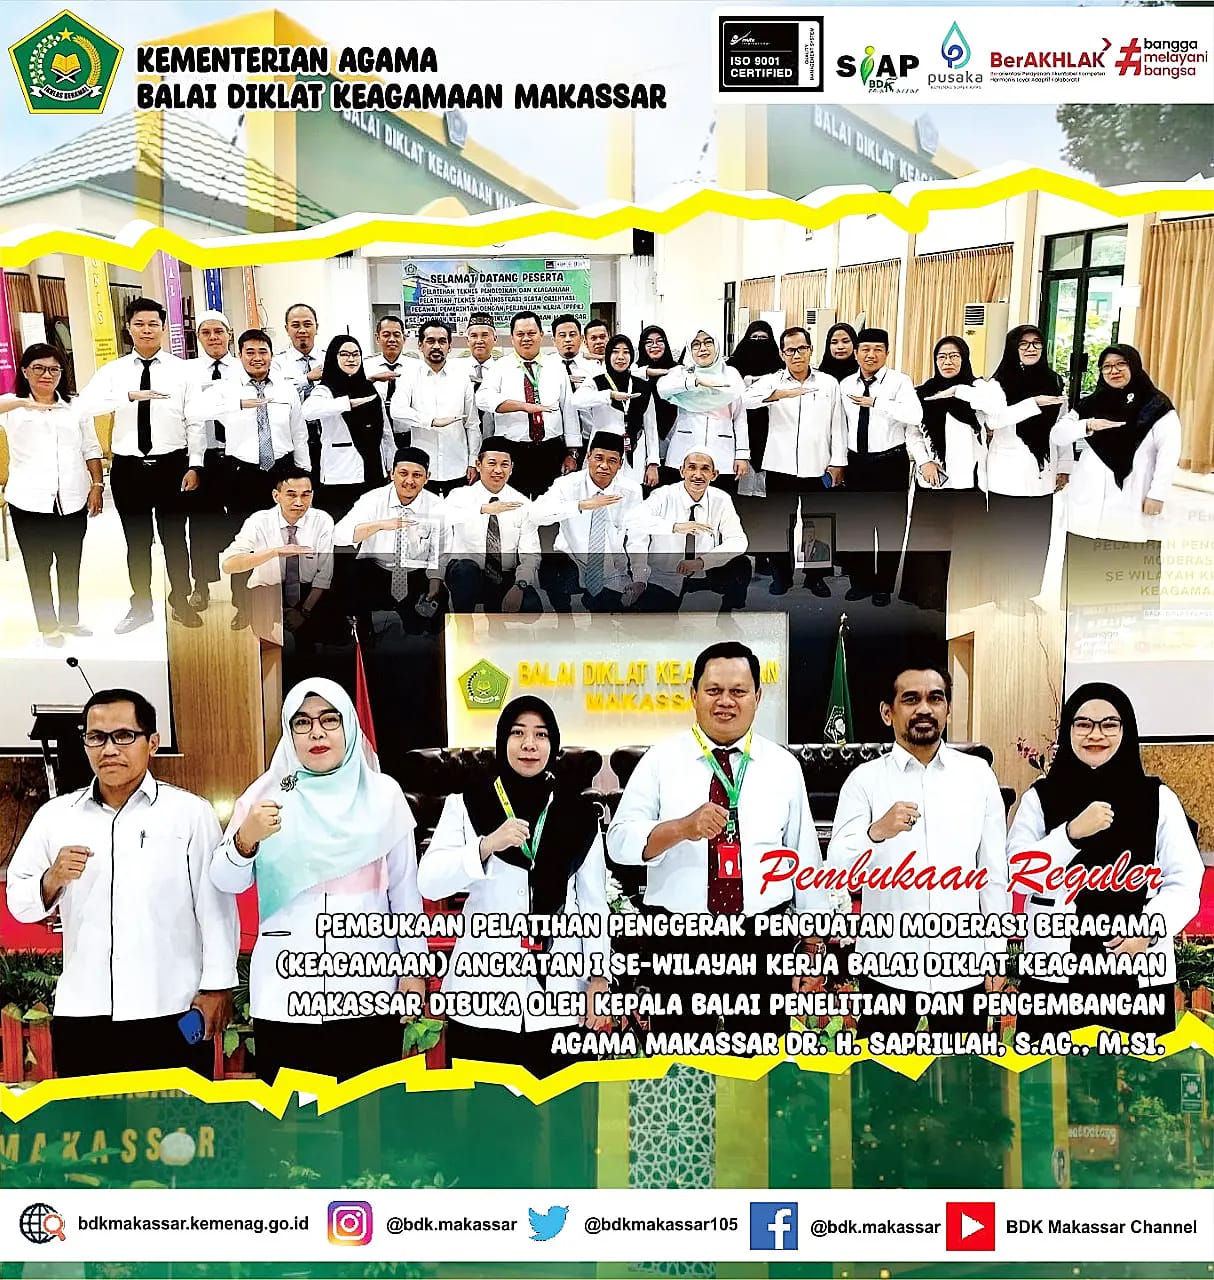 Pelatihan Penguatan Moderasi Beragama digelar di BDK Makassar di bulan Ramadhan